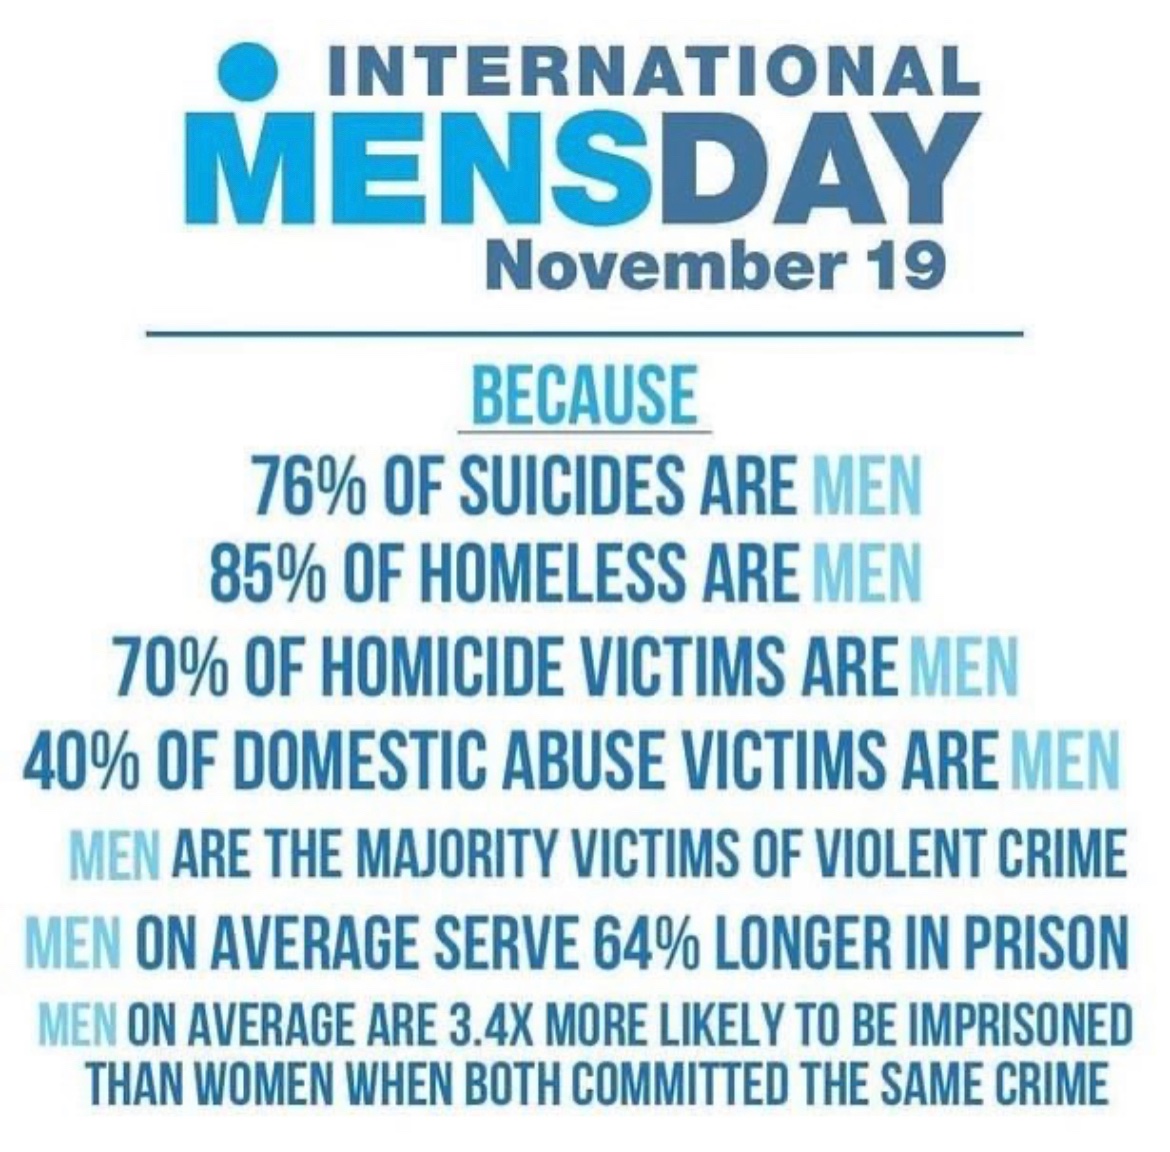 Happy International Men’s Day gents!

#MensDay2023 #MensDay